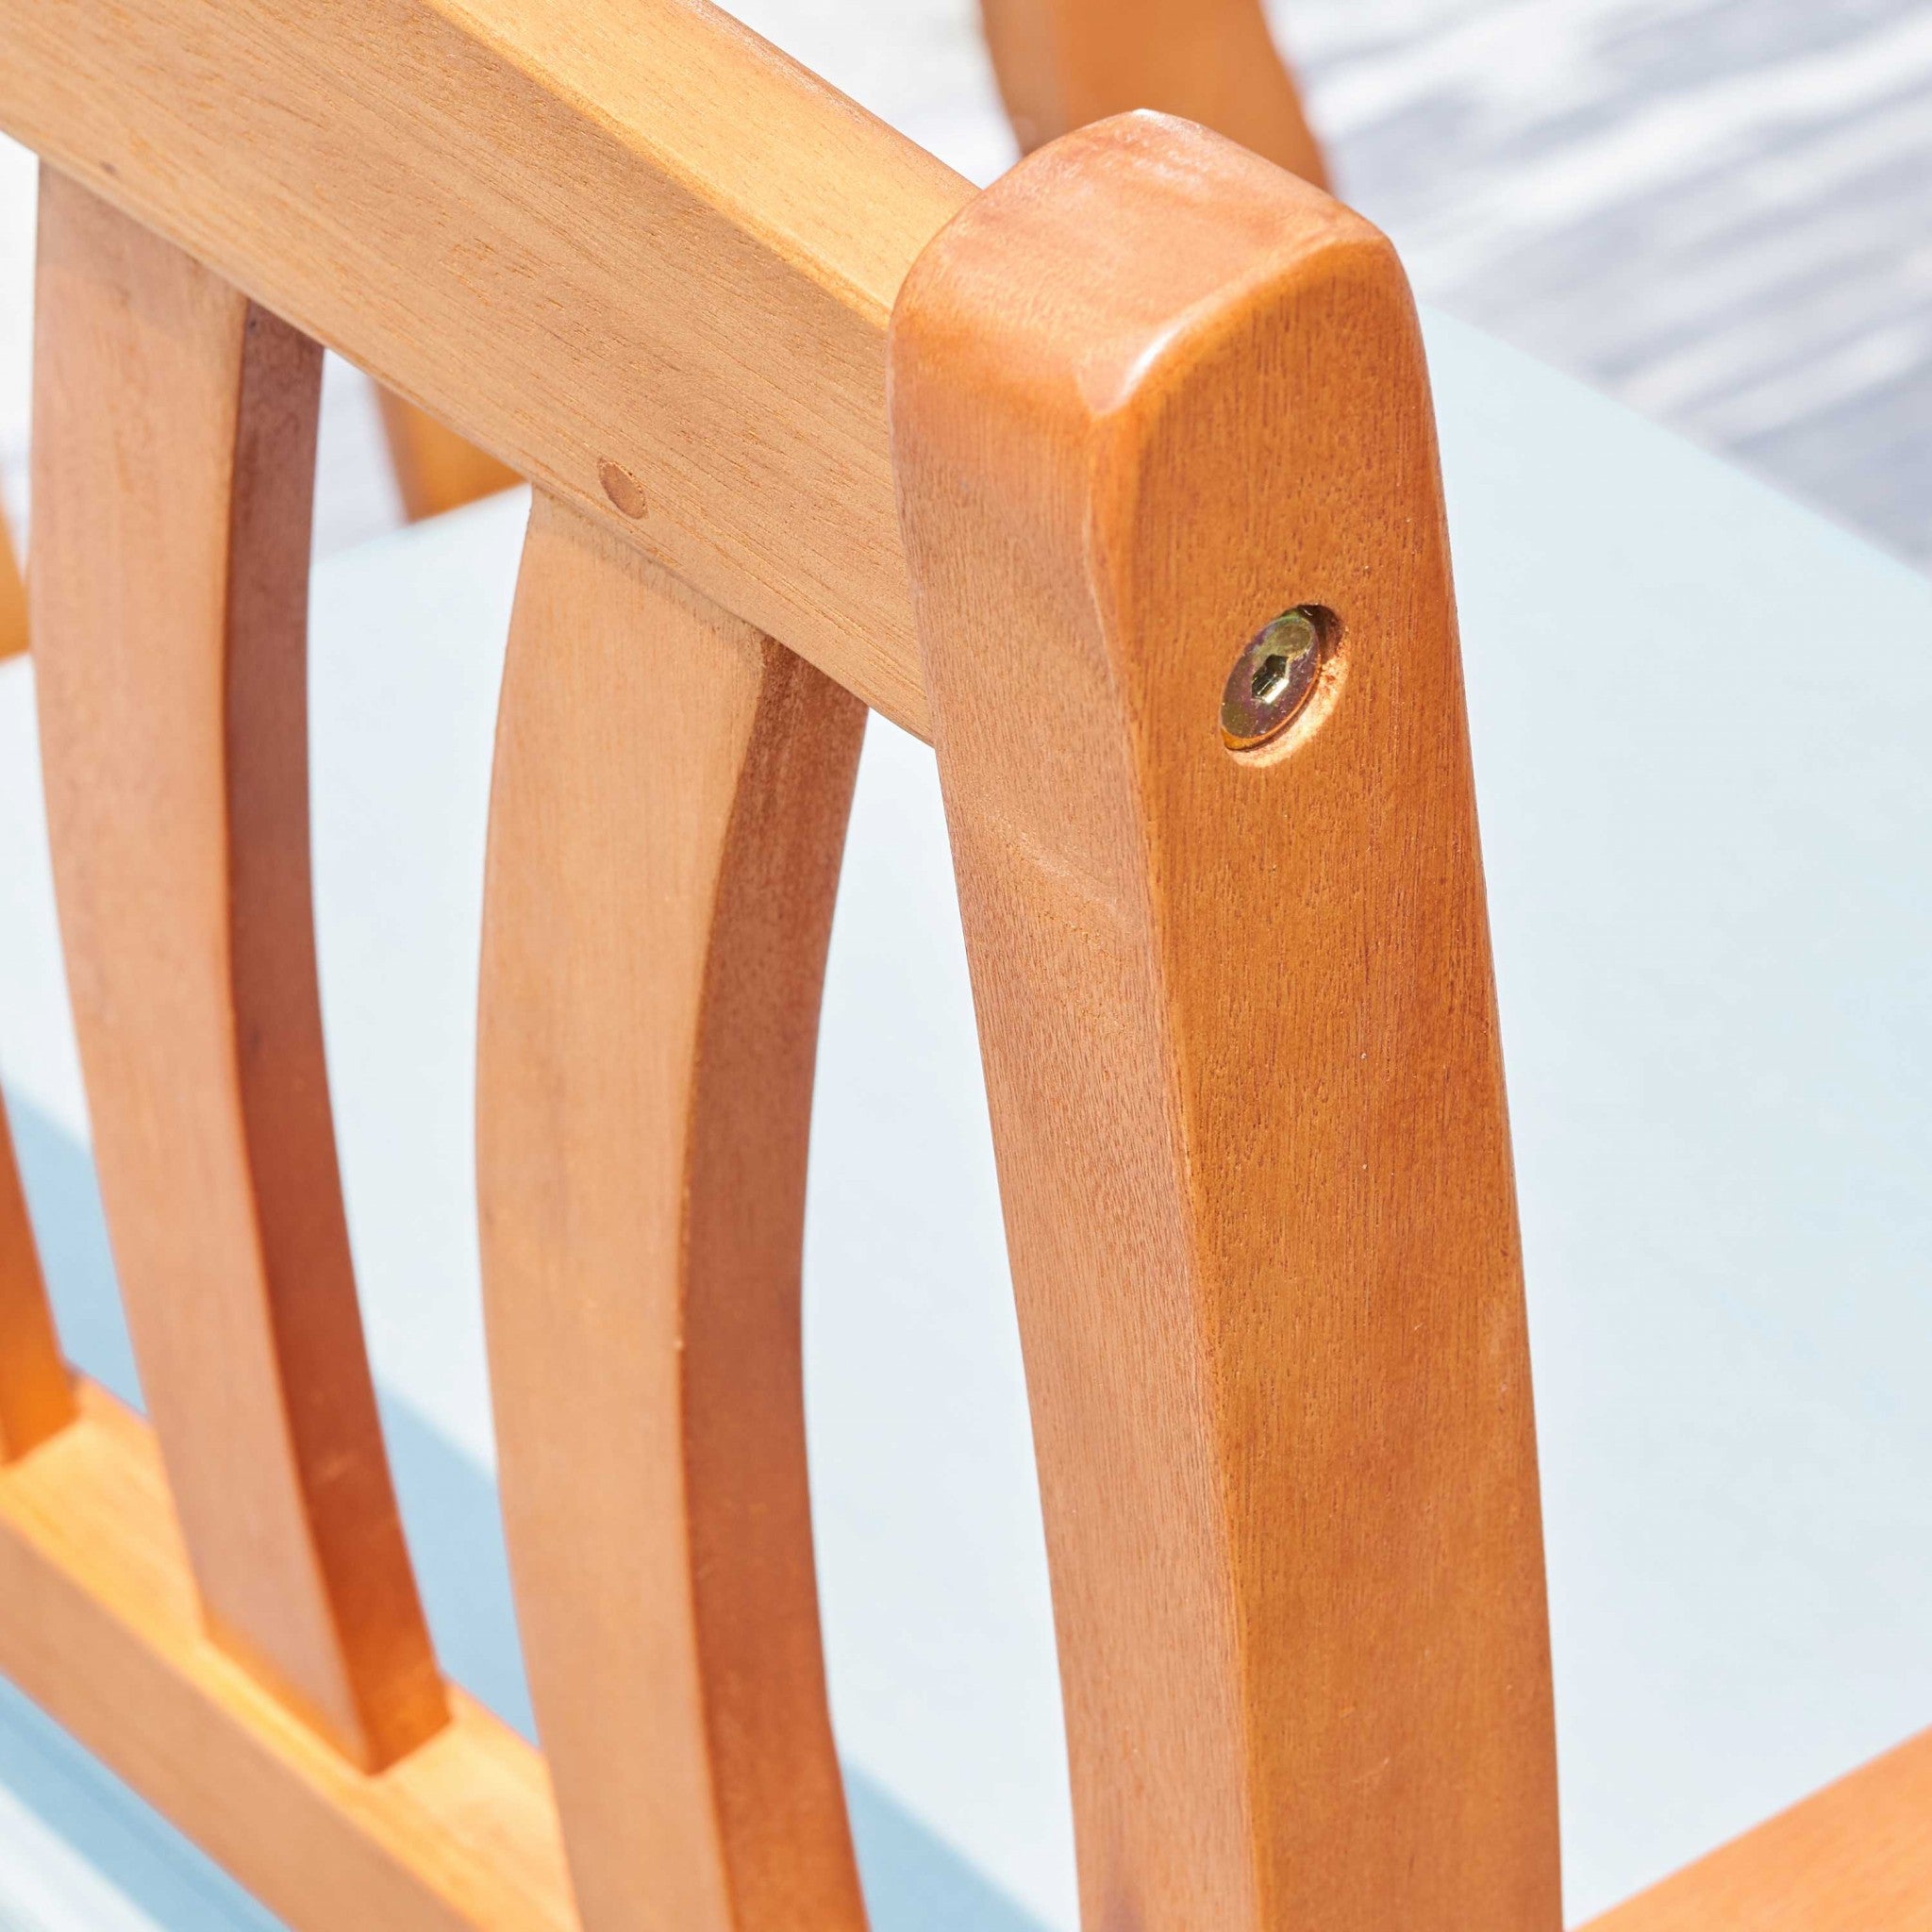 35" Natural Eucalyptus Slat Wood Outdoor Accent Chair with Aqua Cushion